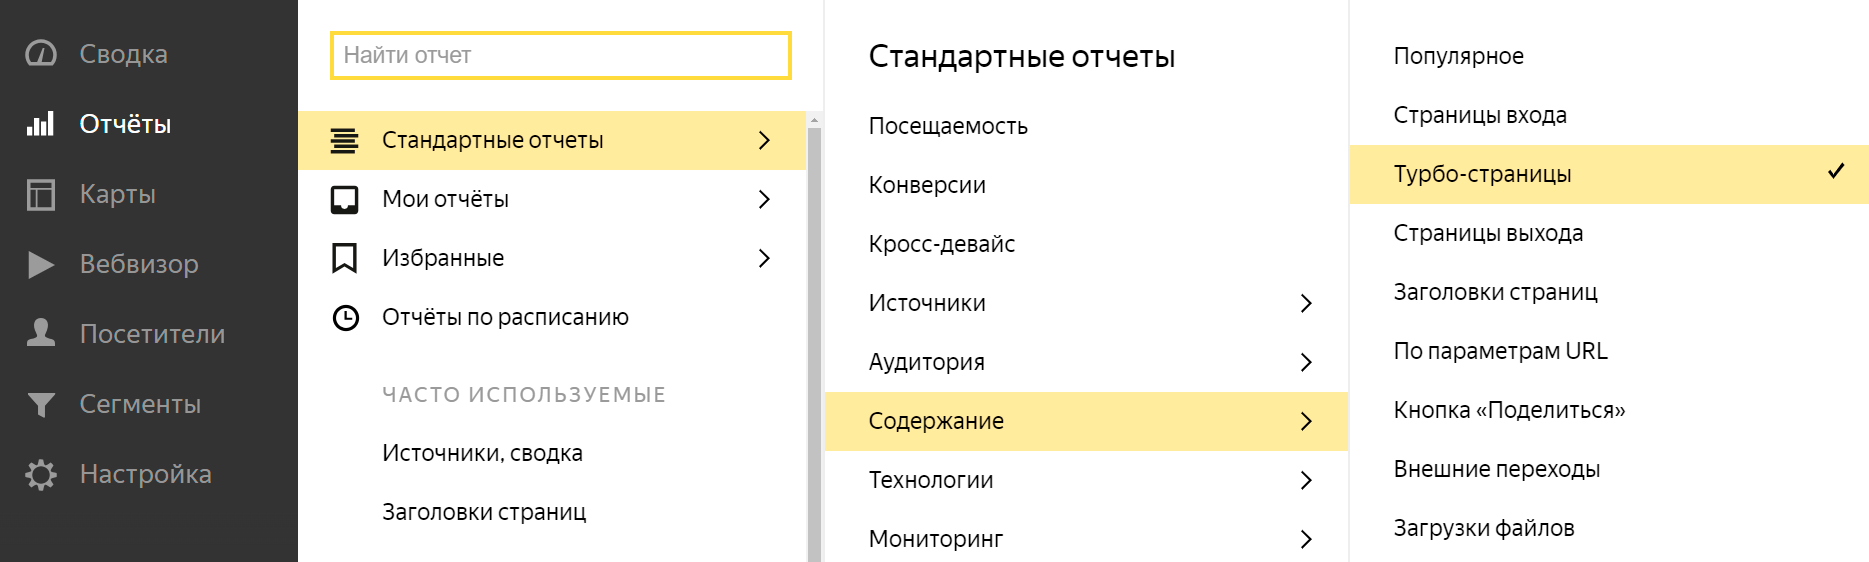 Яндекс.Метрика добавила отчет по Турбо-страницам